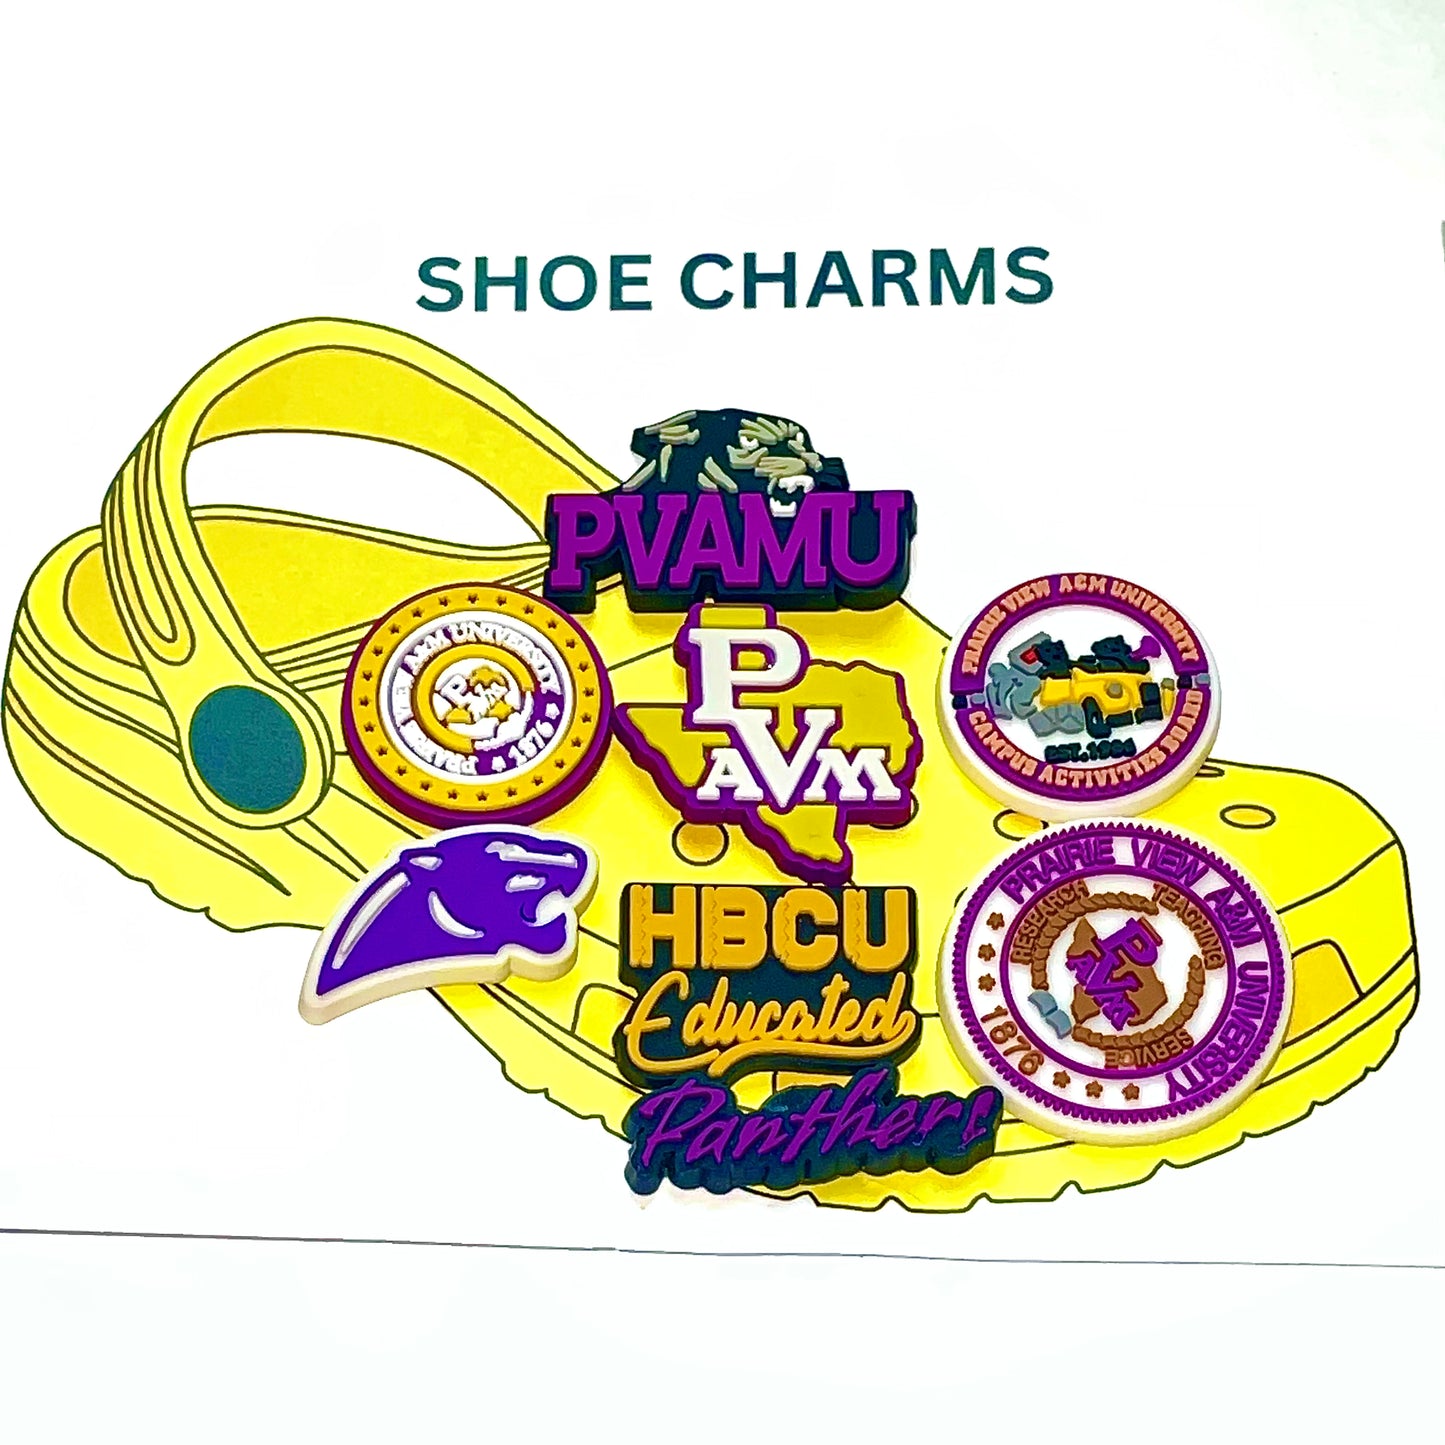 HBCU Prairie View A&M University Shoe Charms